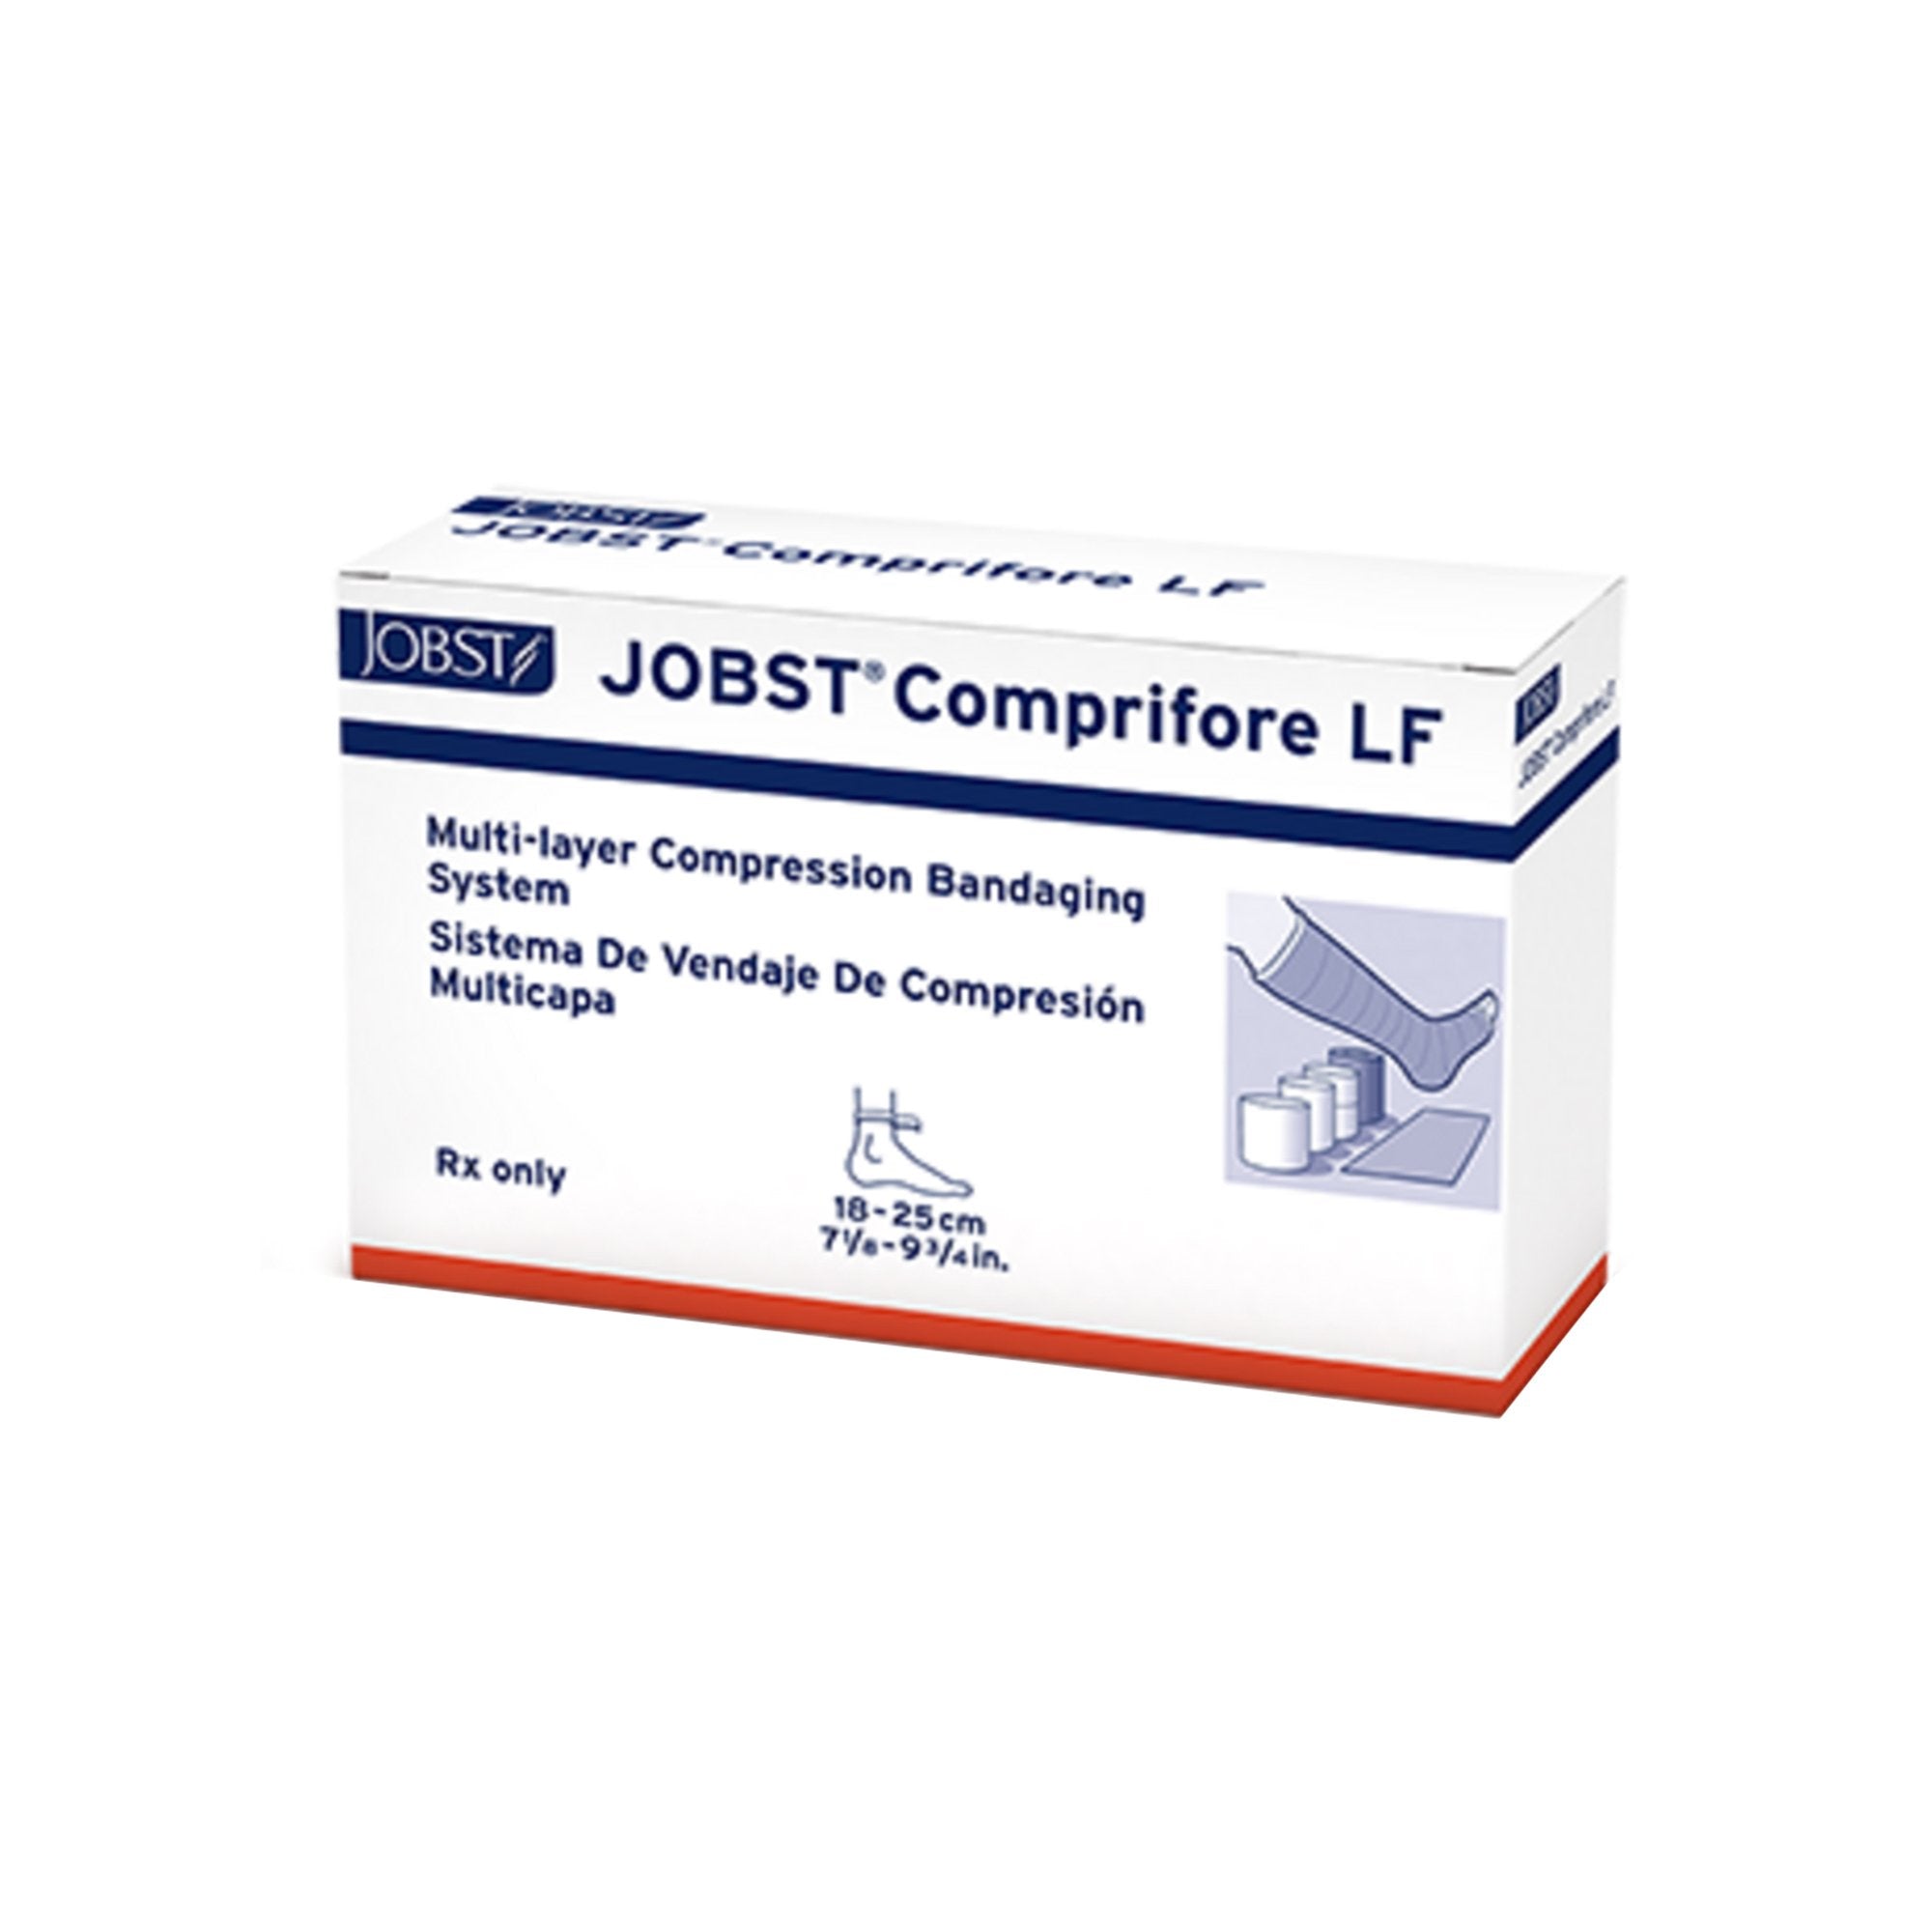 4 Layer Compression Bandage System JOBST® Comprifore® LF 7 to 10 Inch No Closure Tan / White NonSterile 40 mmHg